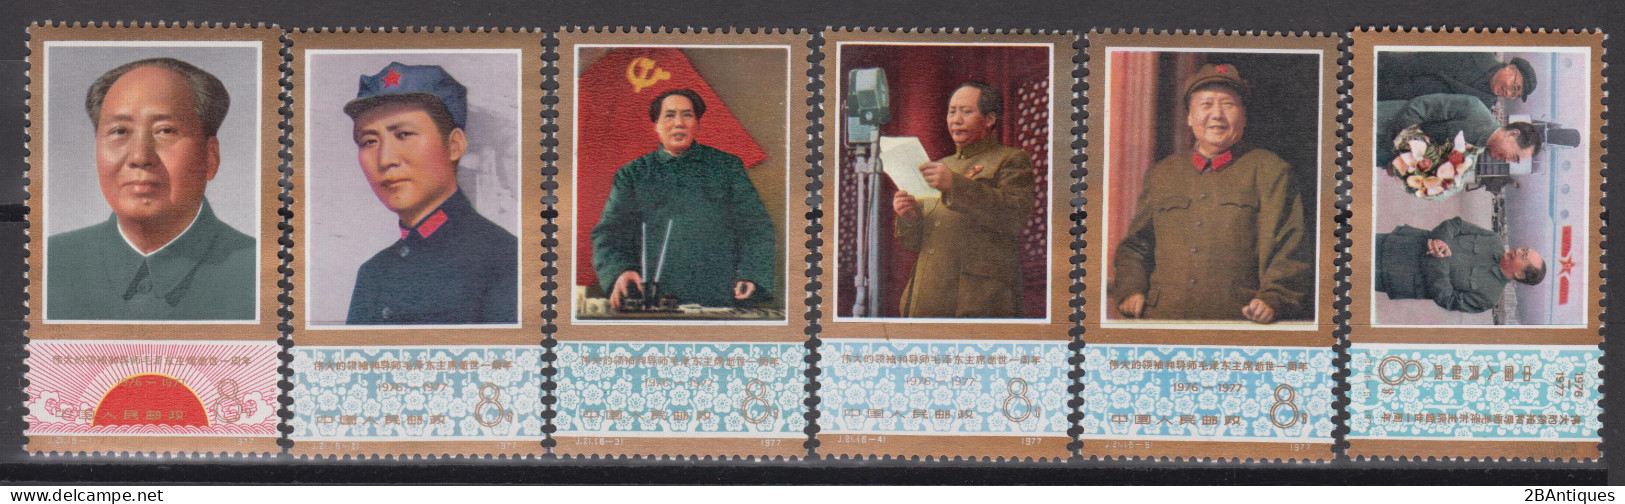 PR CHINA 1977 - The 1st Anniversary Of The Death Of Mao Tse-tung  MNH** OG - Nuovi